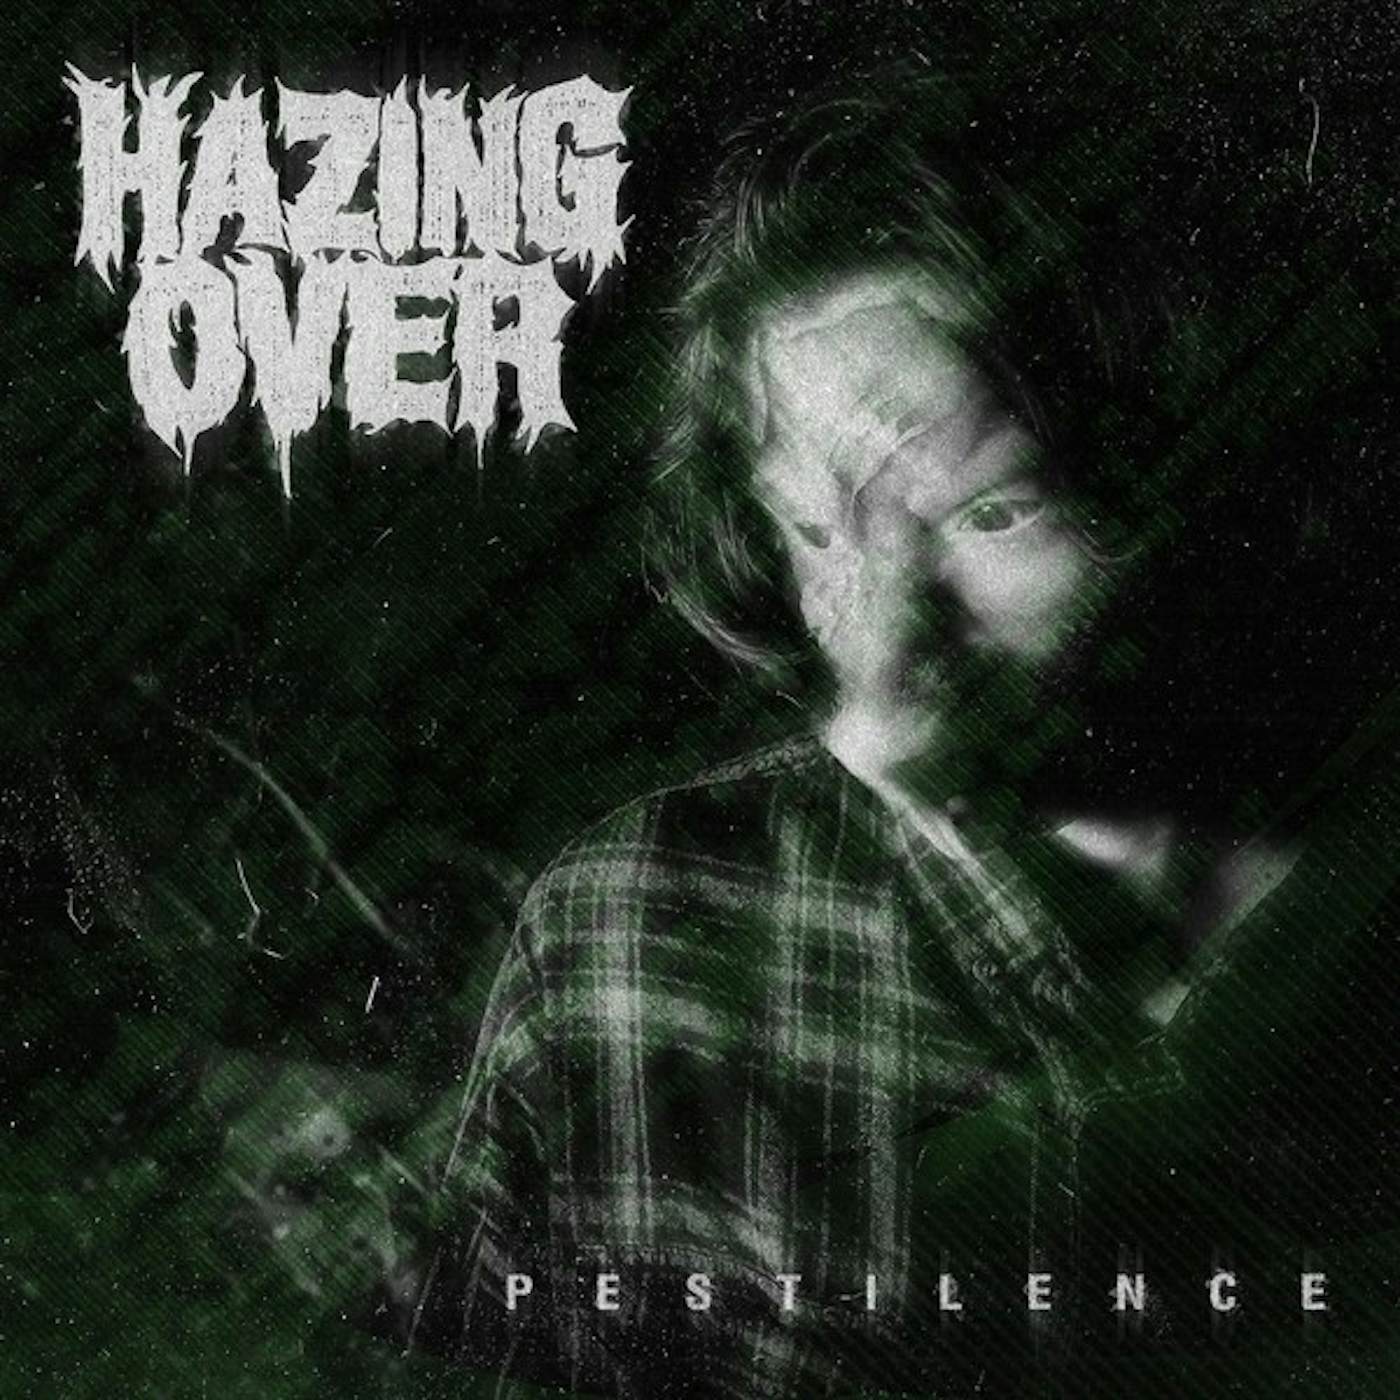 Hazing Over Pestilence Vinyl Record